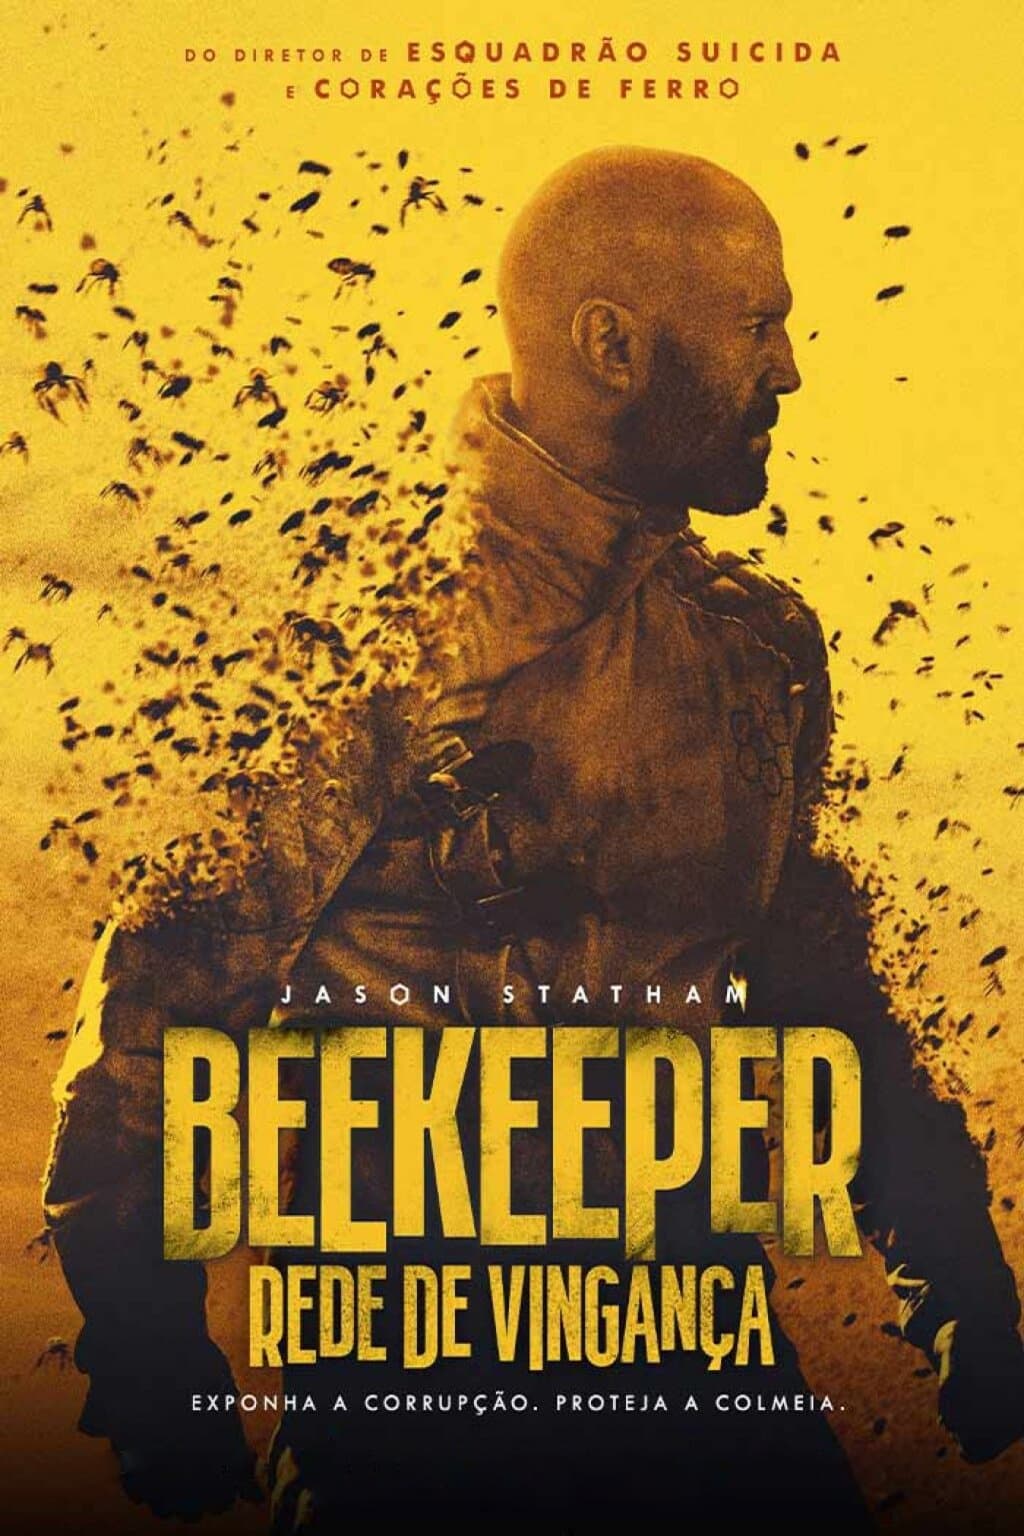 Imagem do Poster do filme 'Beekeeper - Rede de Vingança (The Beekeeper)'